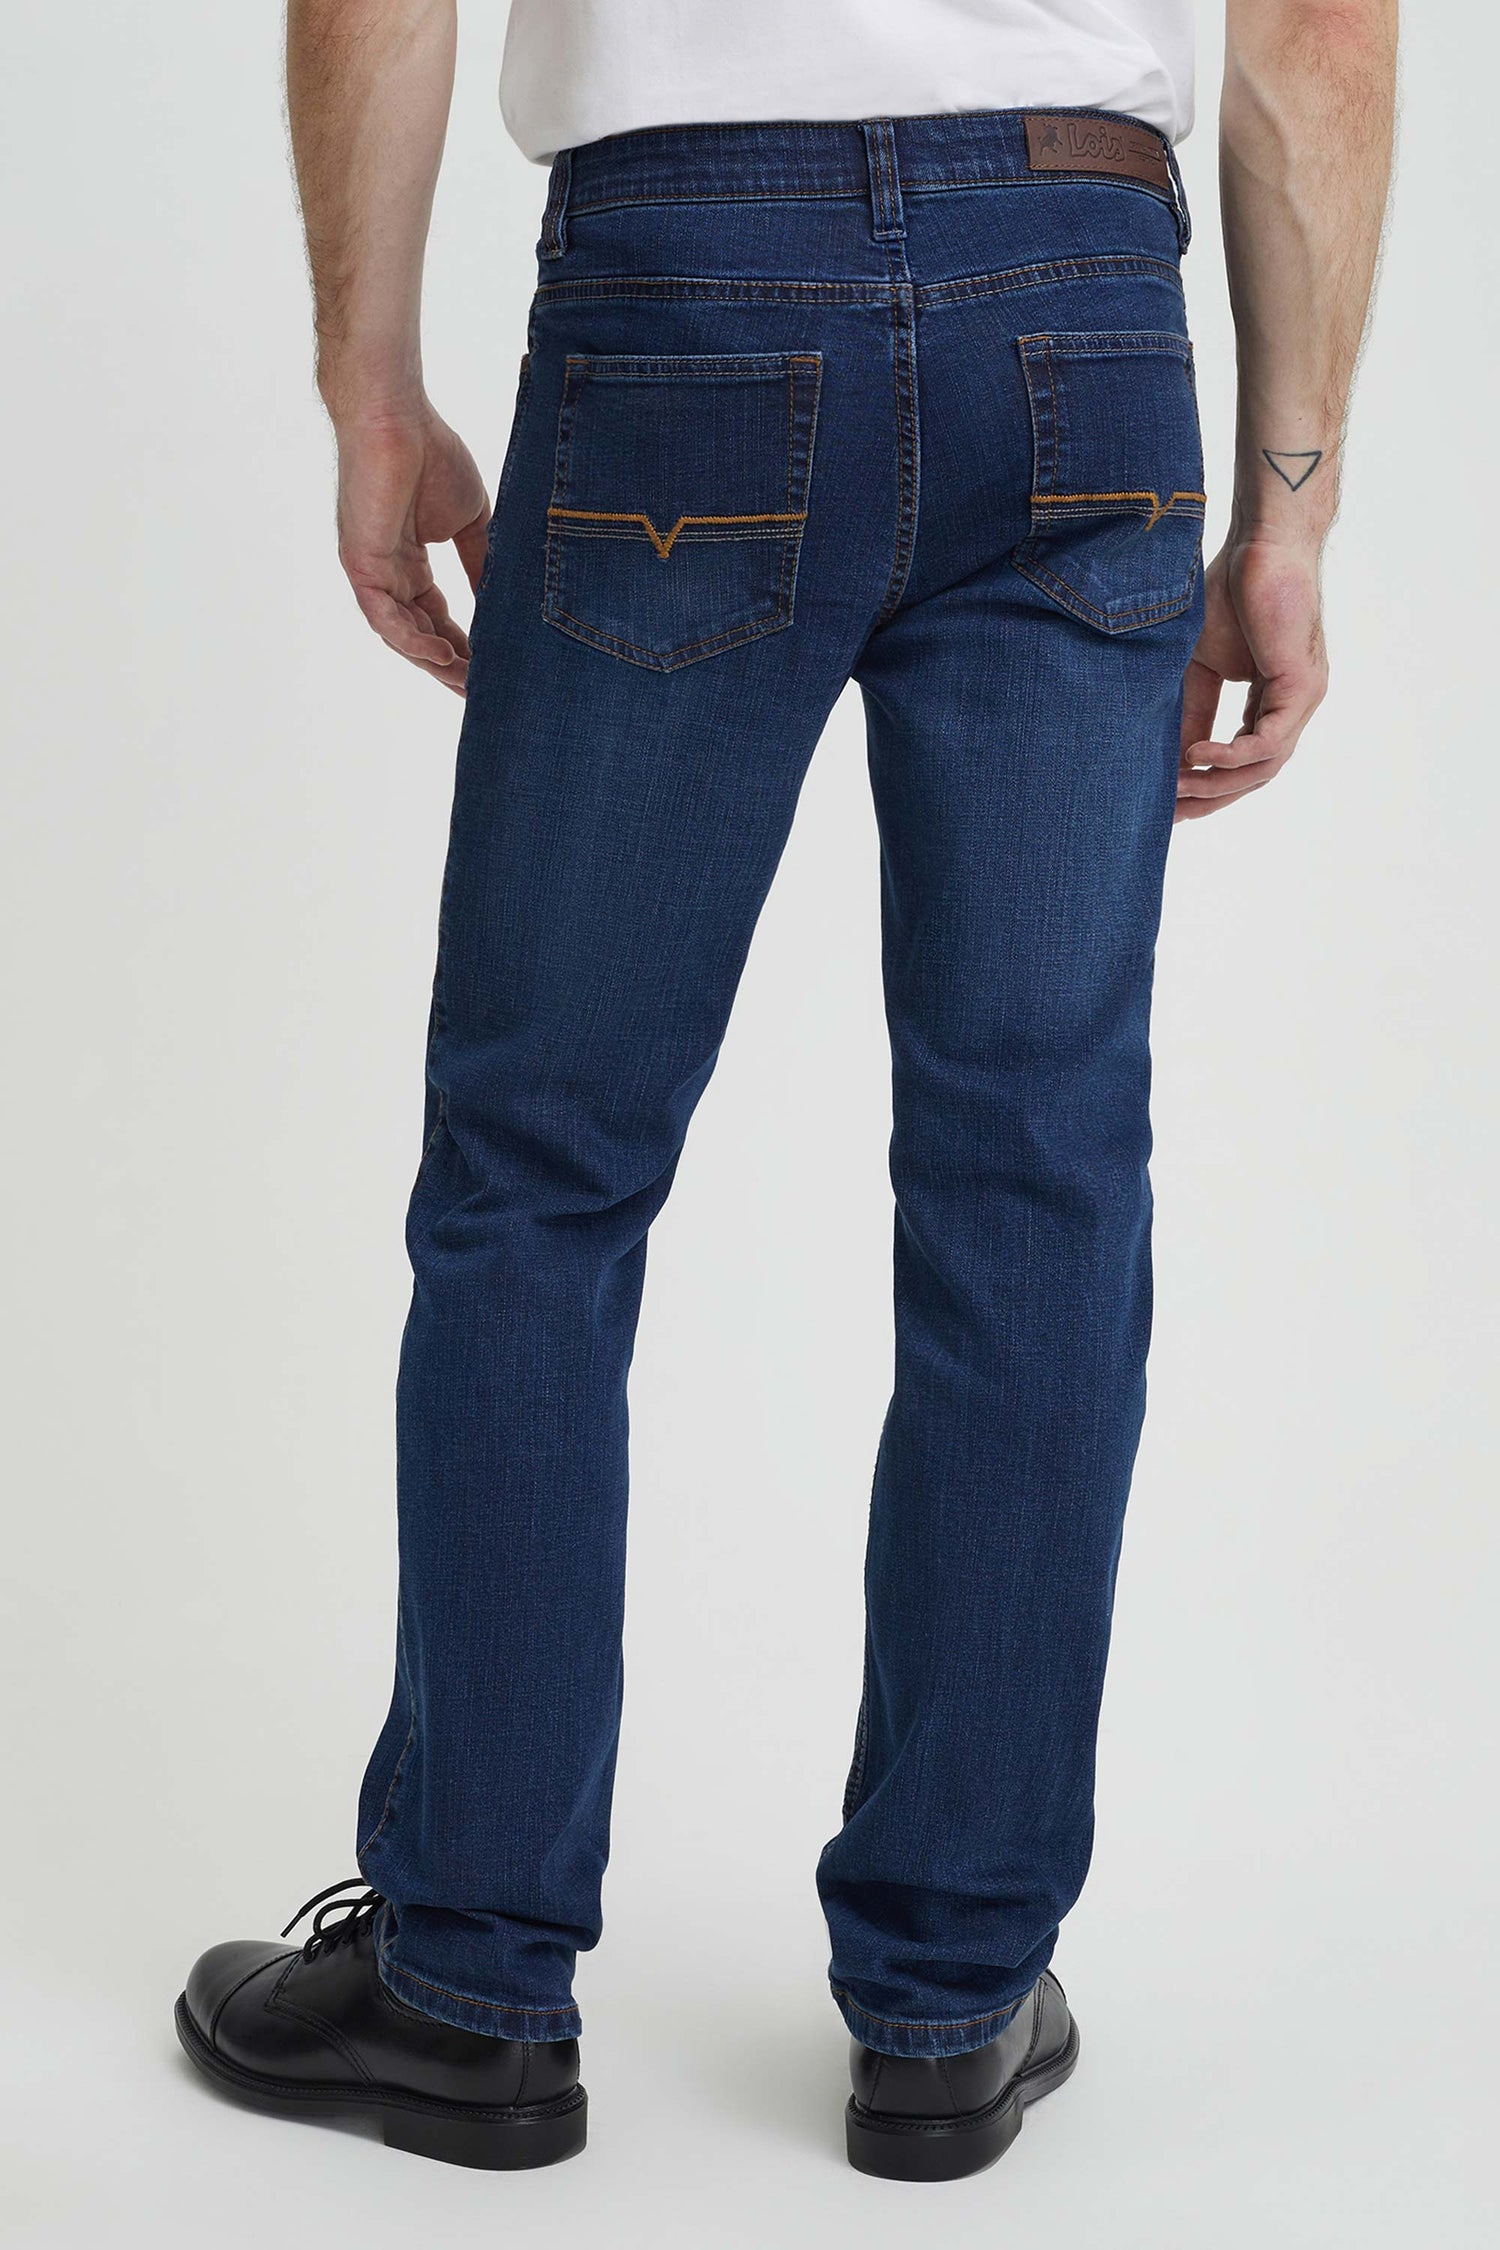 Peter jeans with semi-low waist – Le Jean Bleu